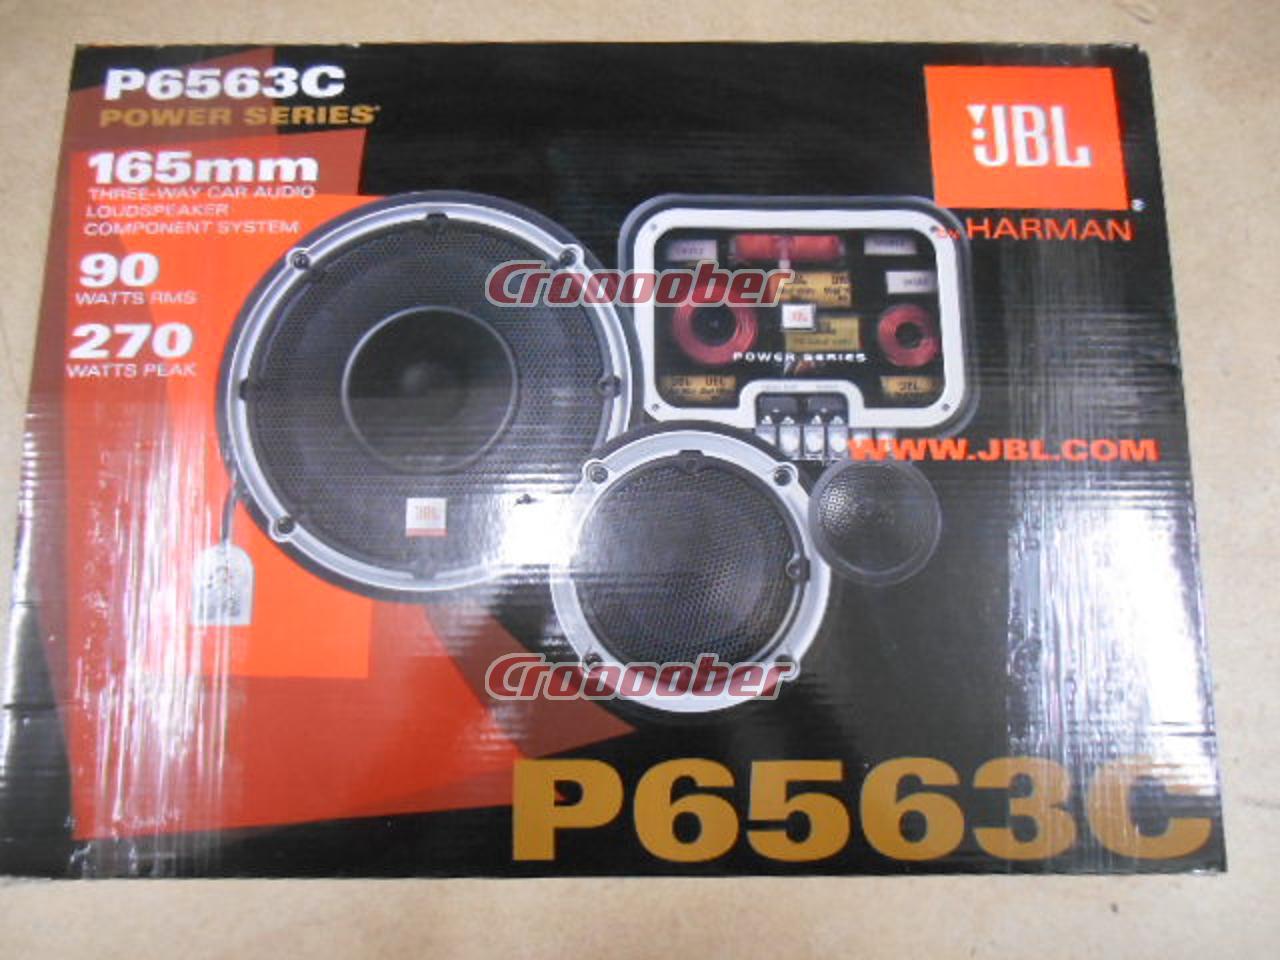 RX1508-091 JBL P6563C | スピーカー 埋め込みスピーカーパーツの通販 